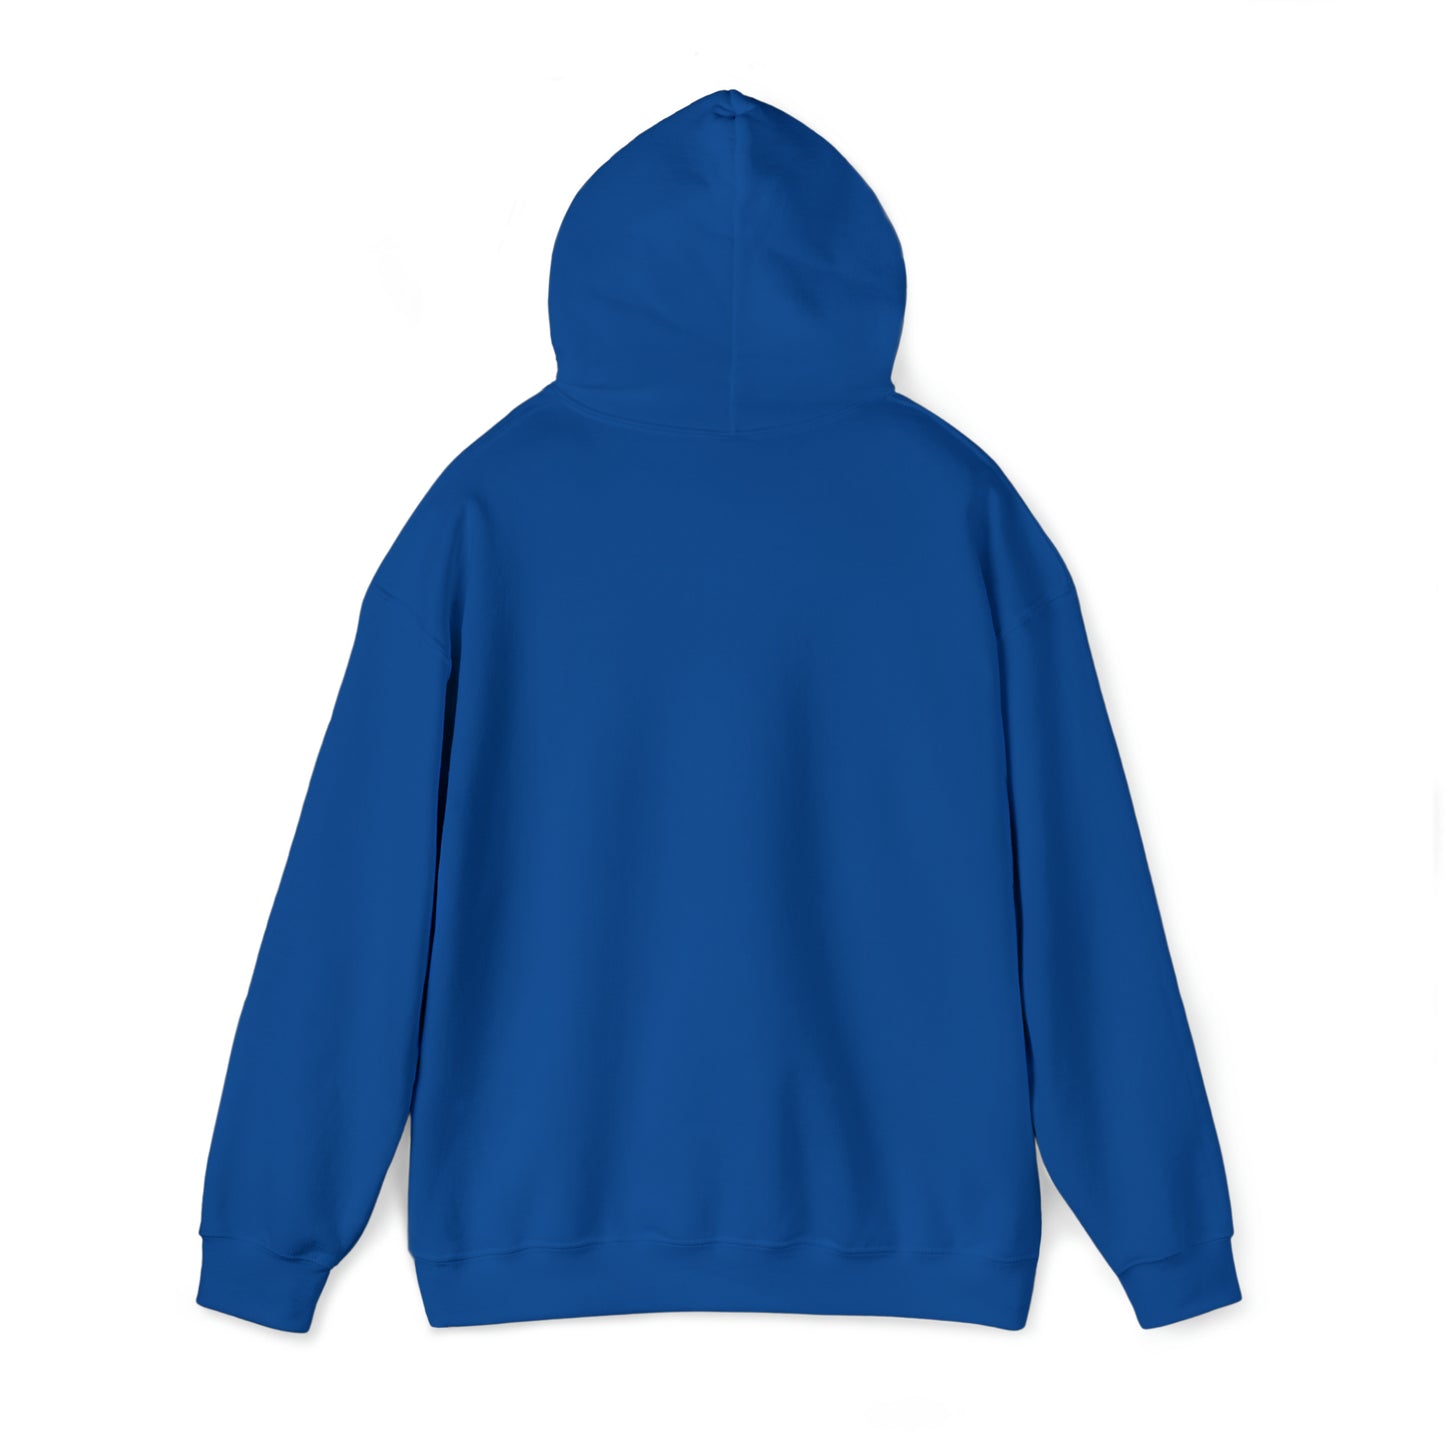 Faith - Hope - Love -1 Unisex Heavy Blend™ Hooded Sweatshirt